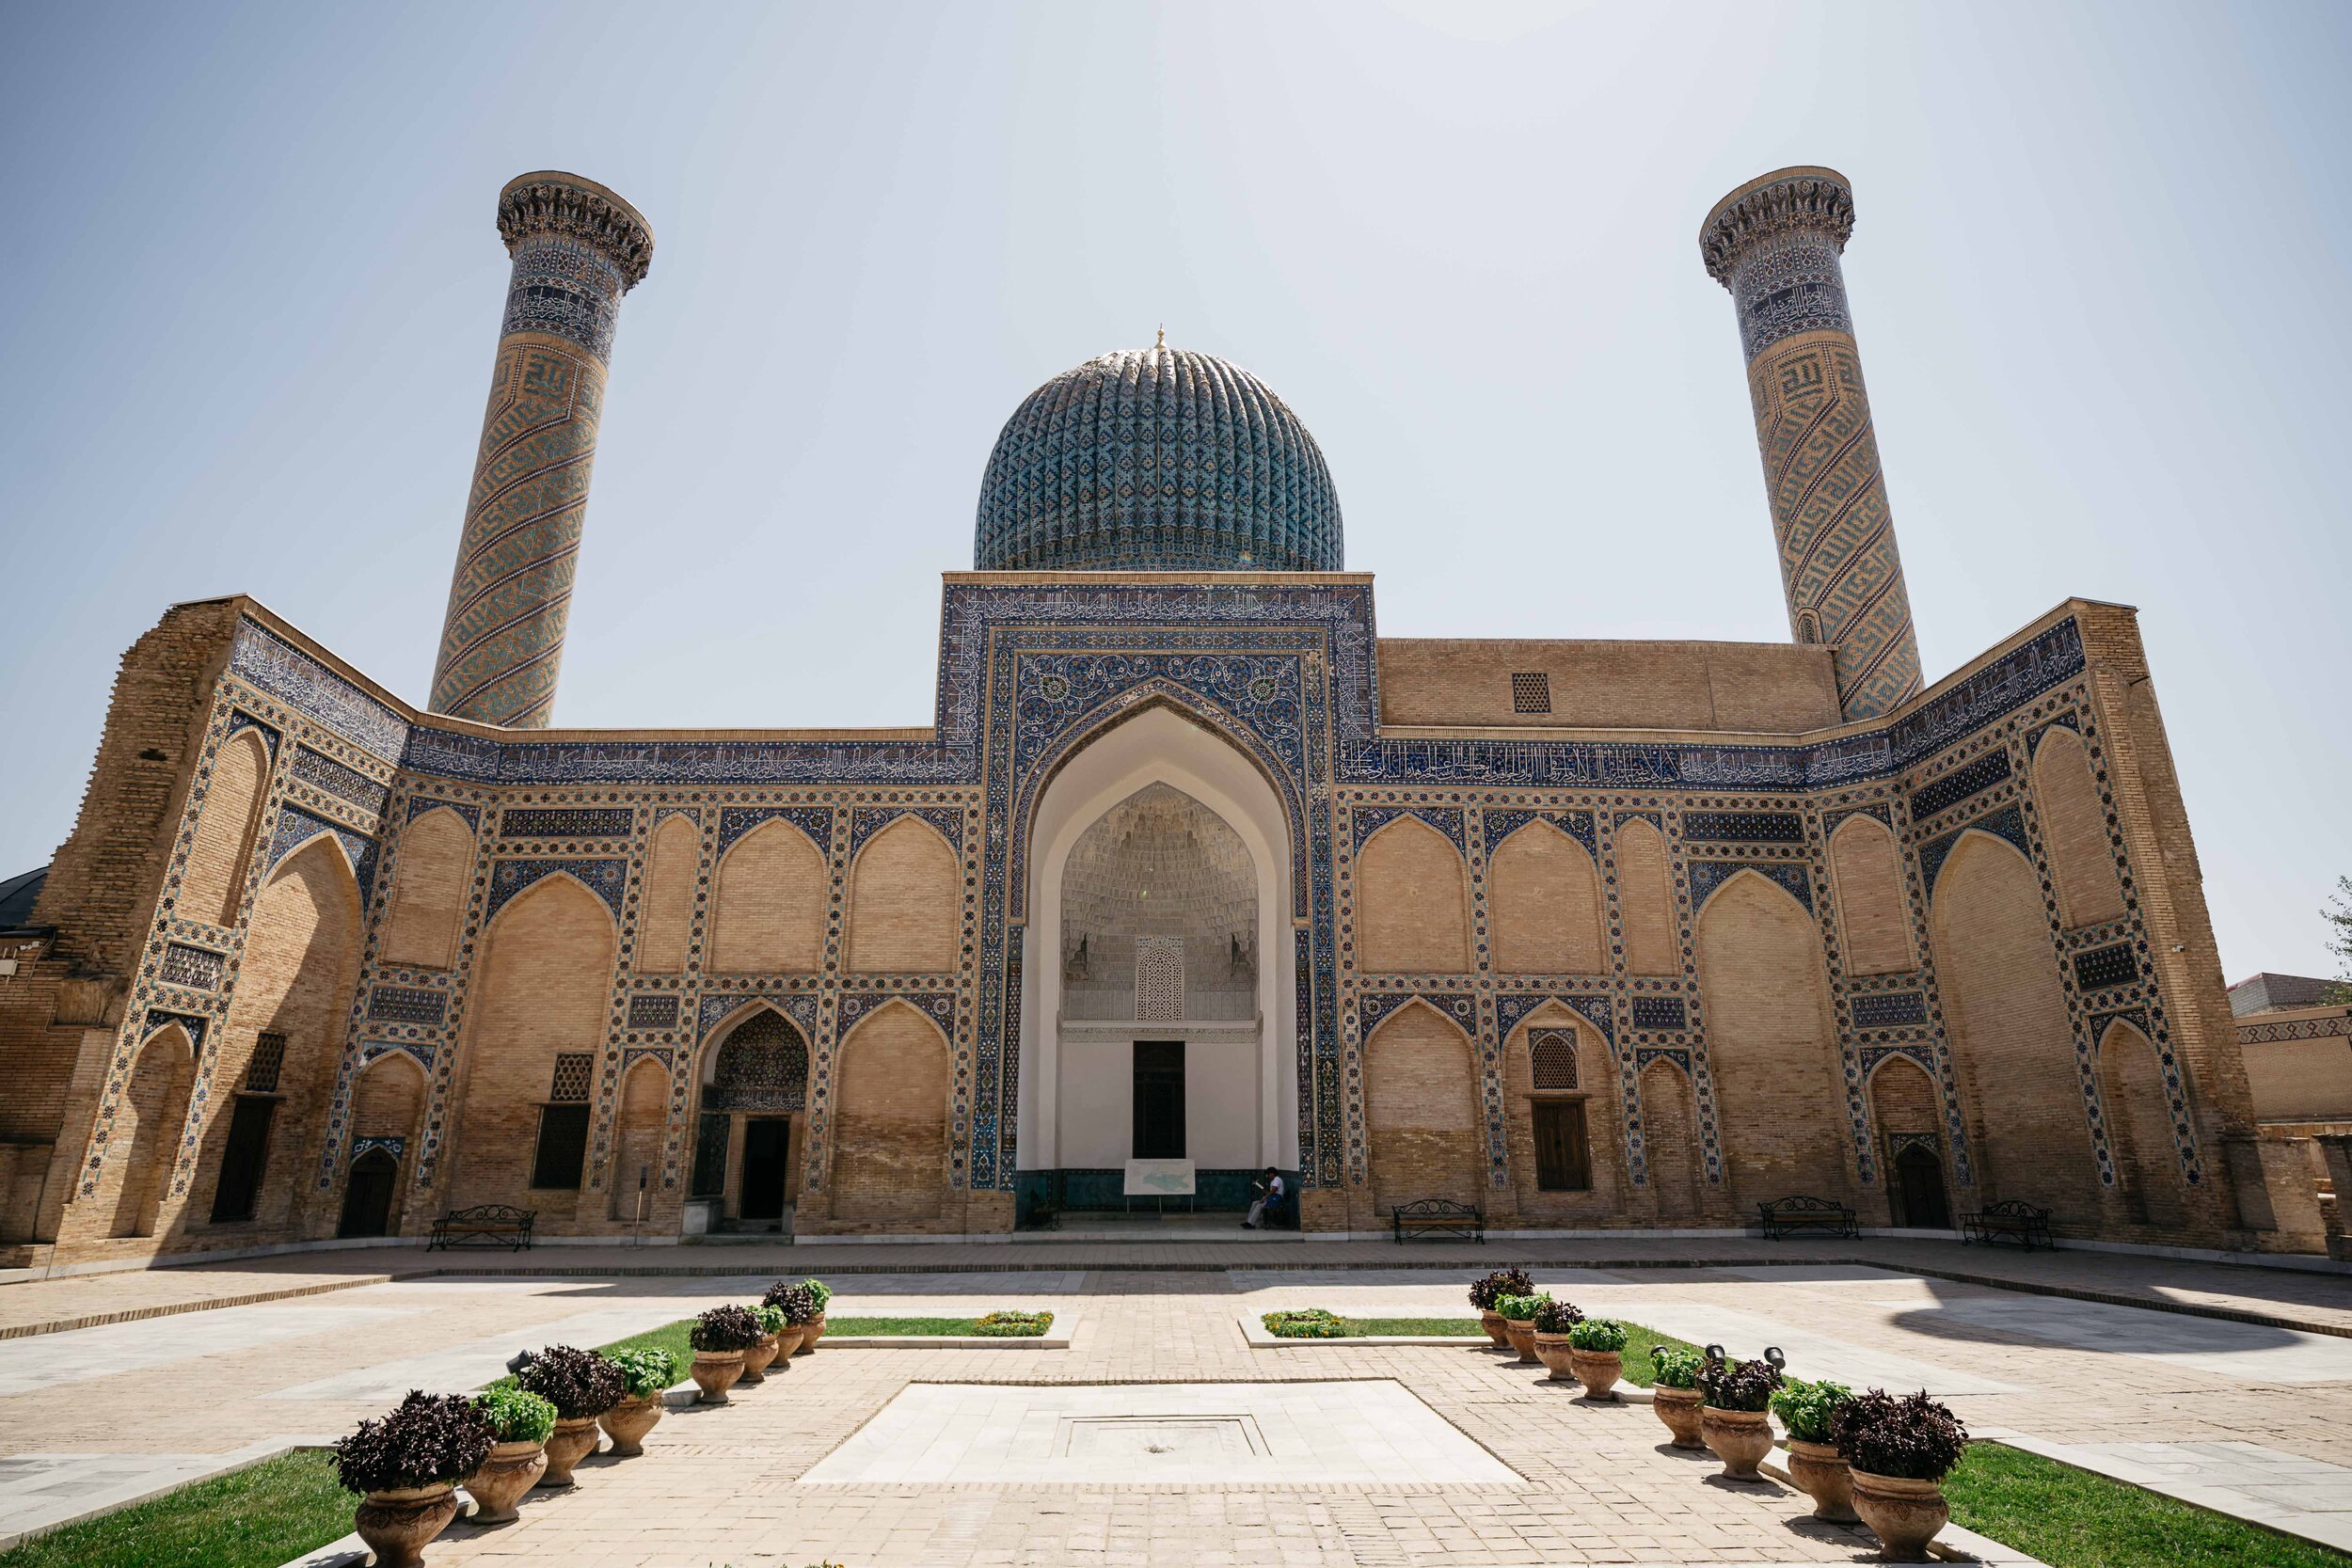  The entrance to Guri Amir Mausoleum 